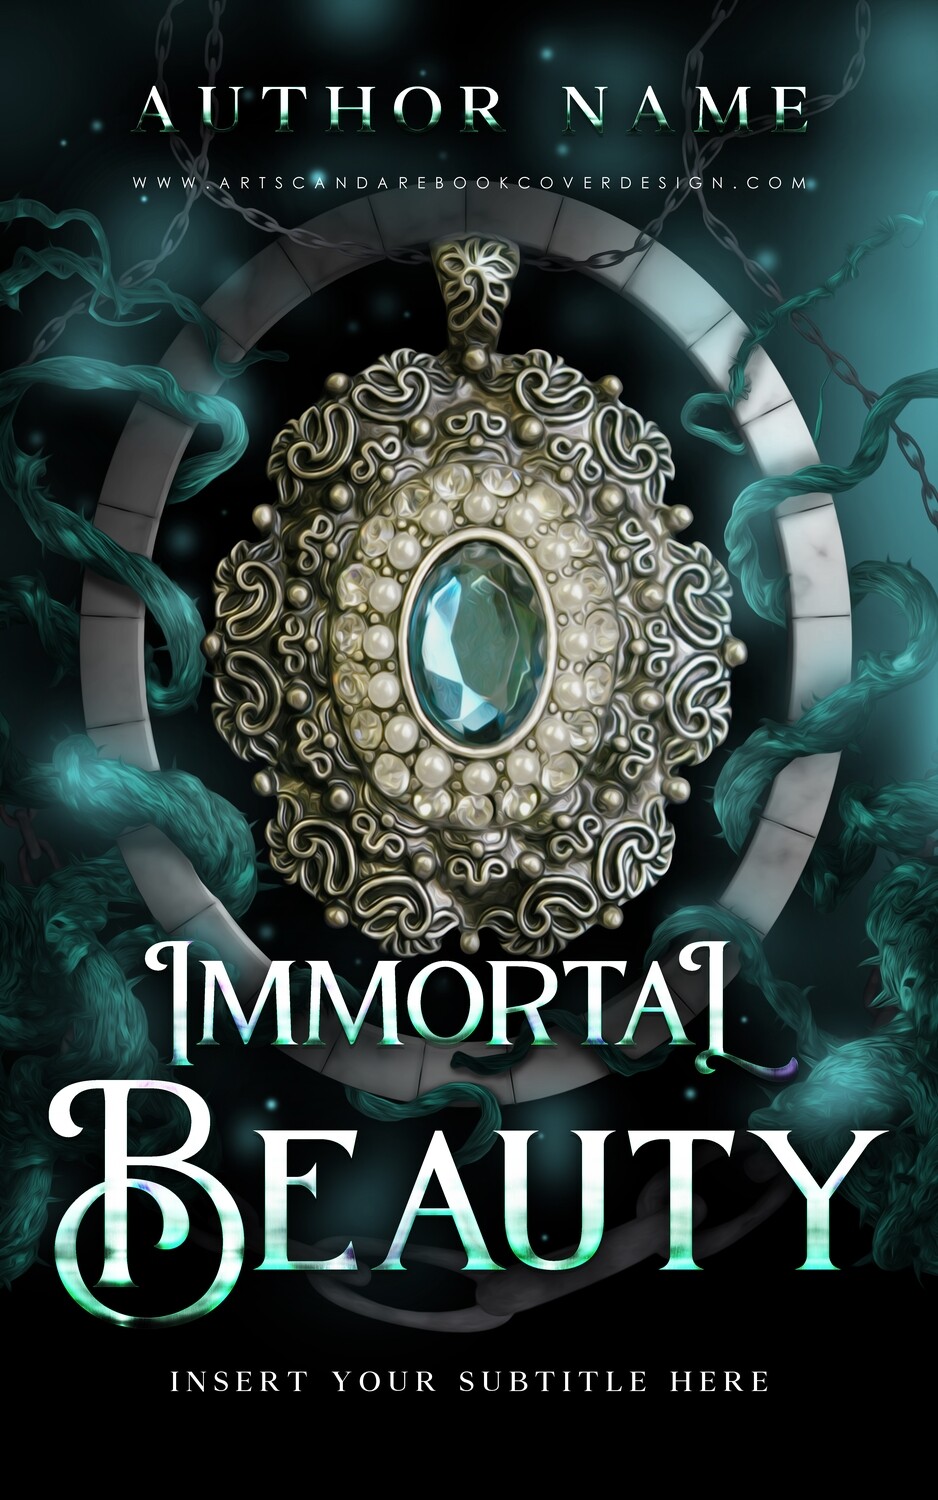 Ebook: Immortal Beauty